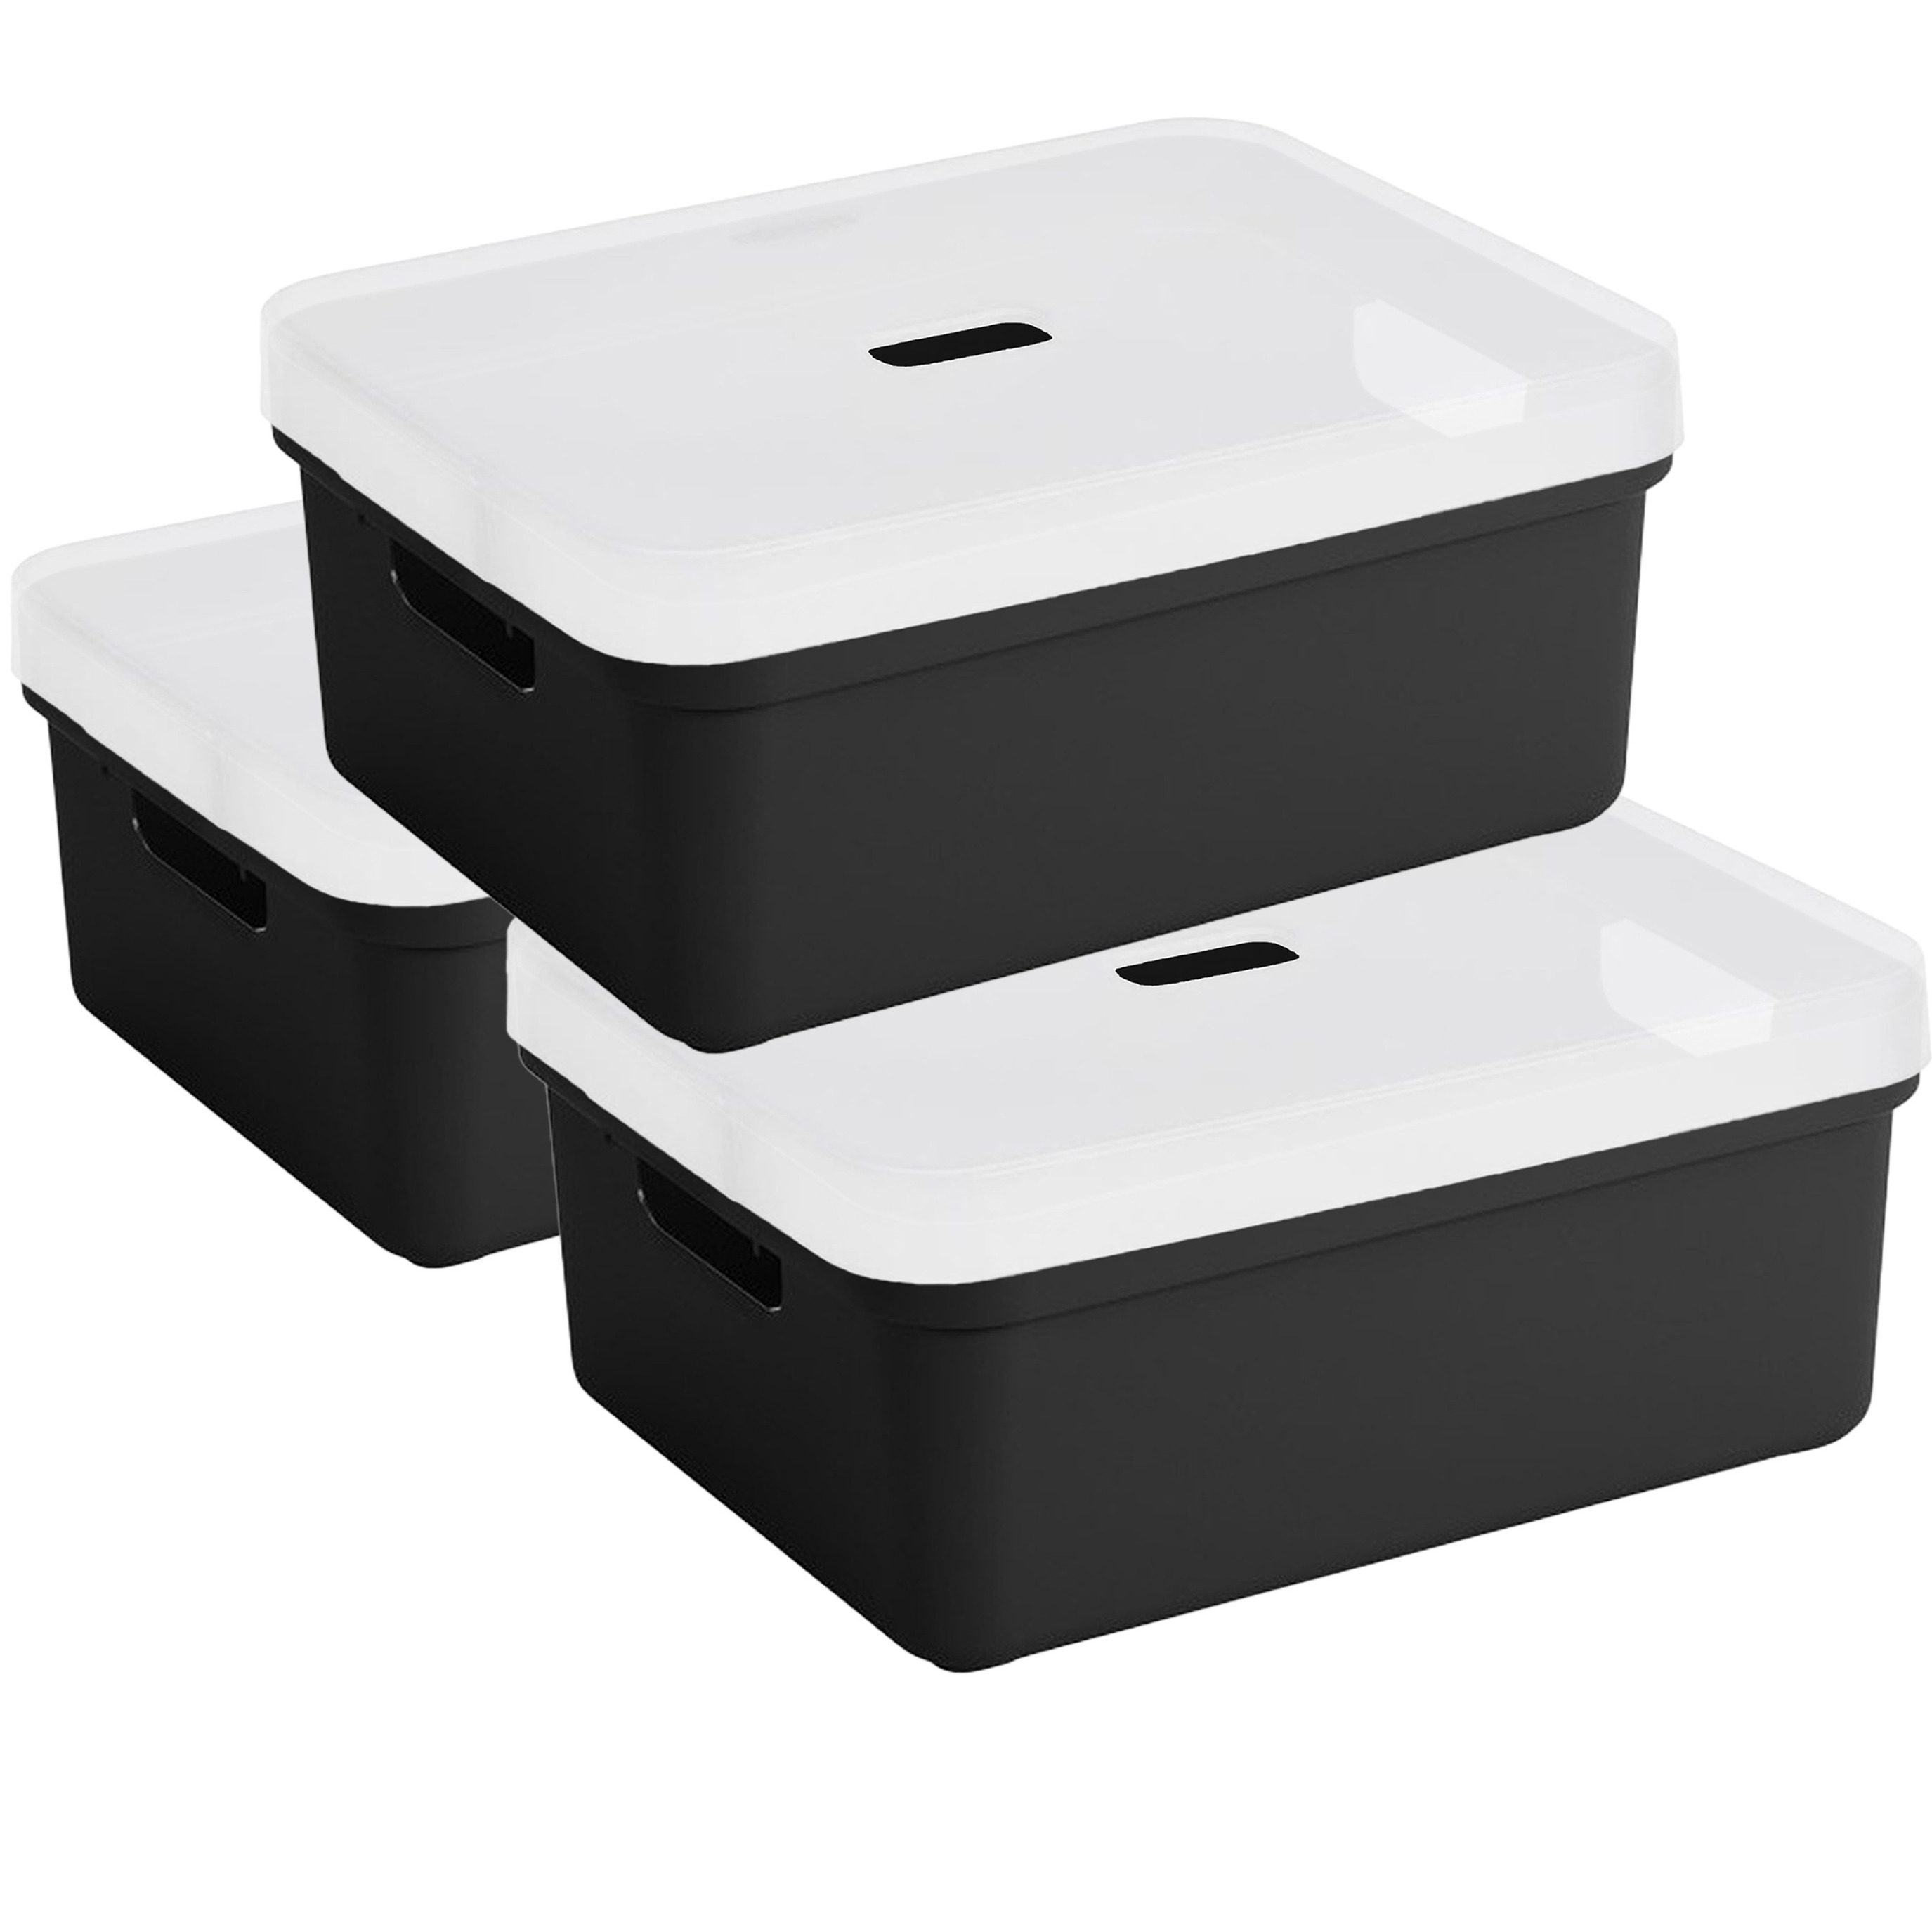 3x Sunware opbergbox-mand 24 liter zwart kunststof met transparante deksel